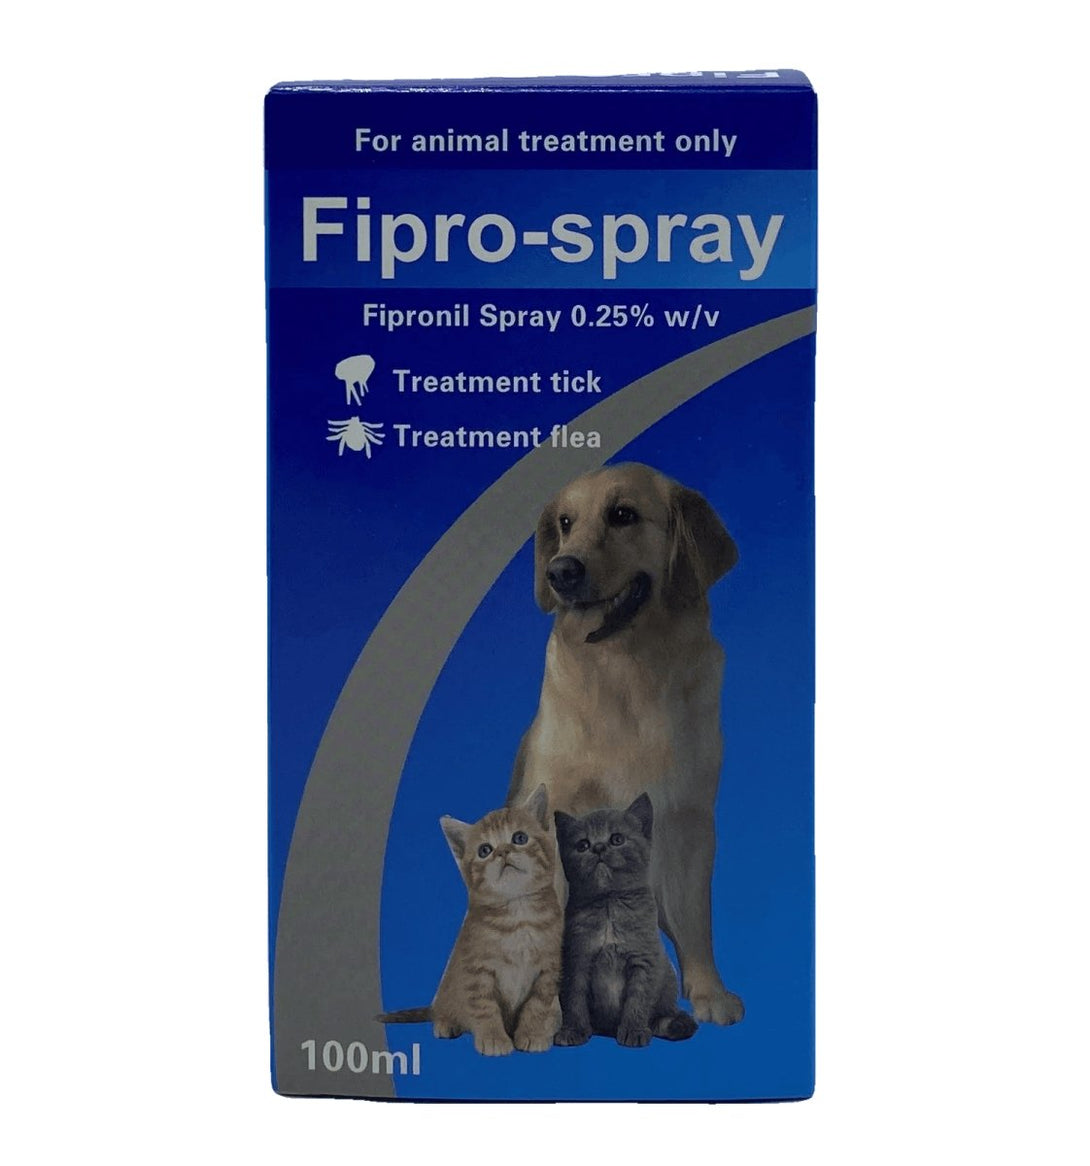 Fipro-spray 100ml - Shopivet.com